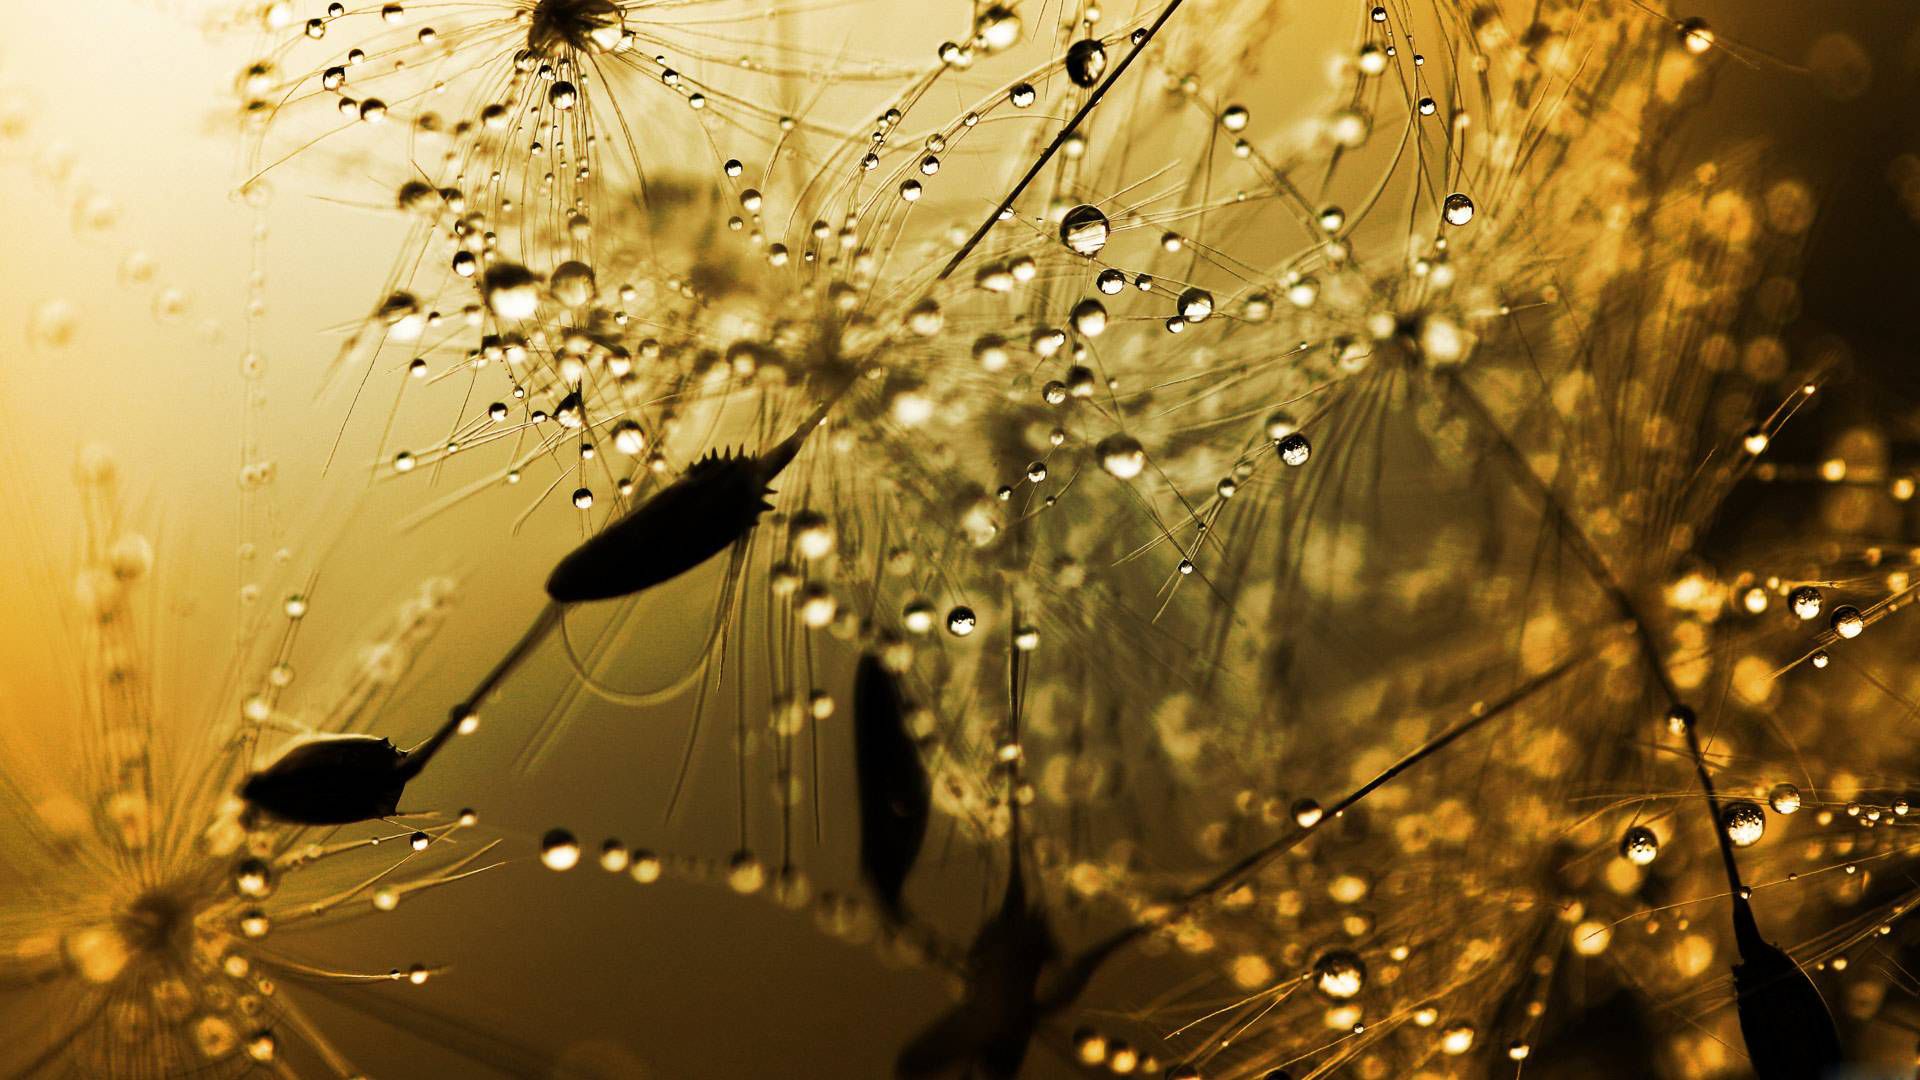 Beautiful Rain Image Wallpaper HD Click And You Save